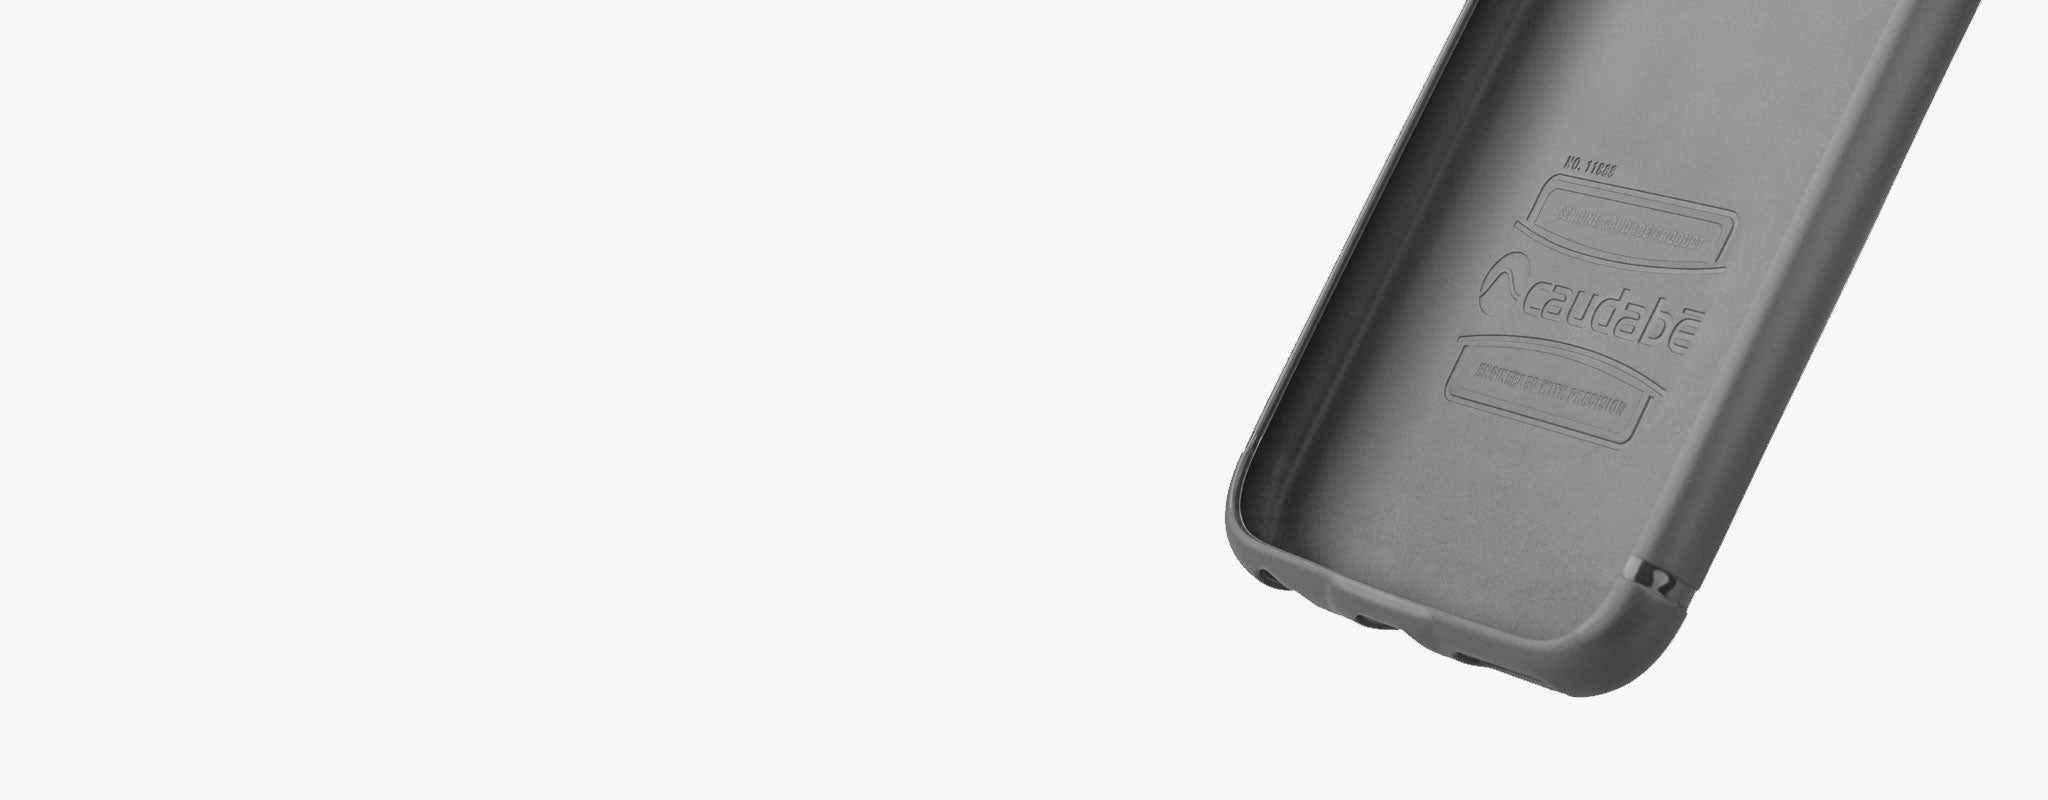 The Sheath | Super slim, shock-absorbing minimalist iPhone case | inside